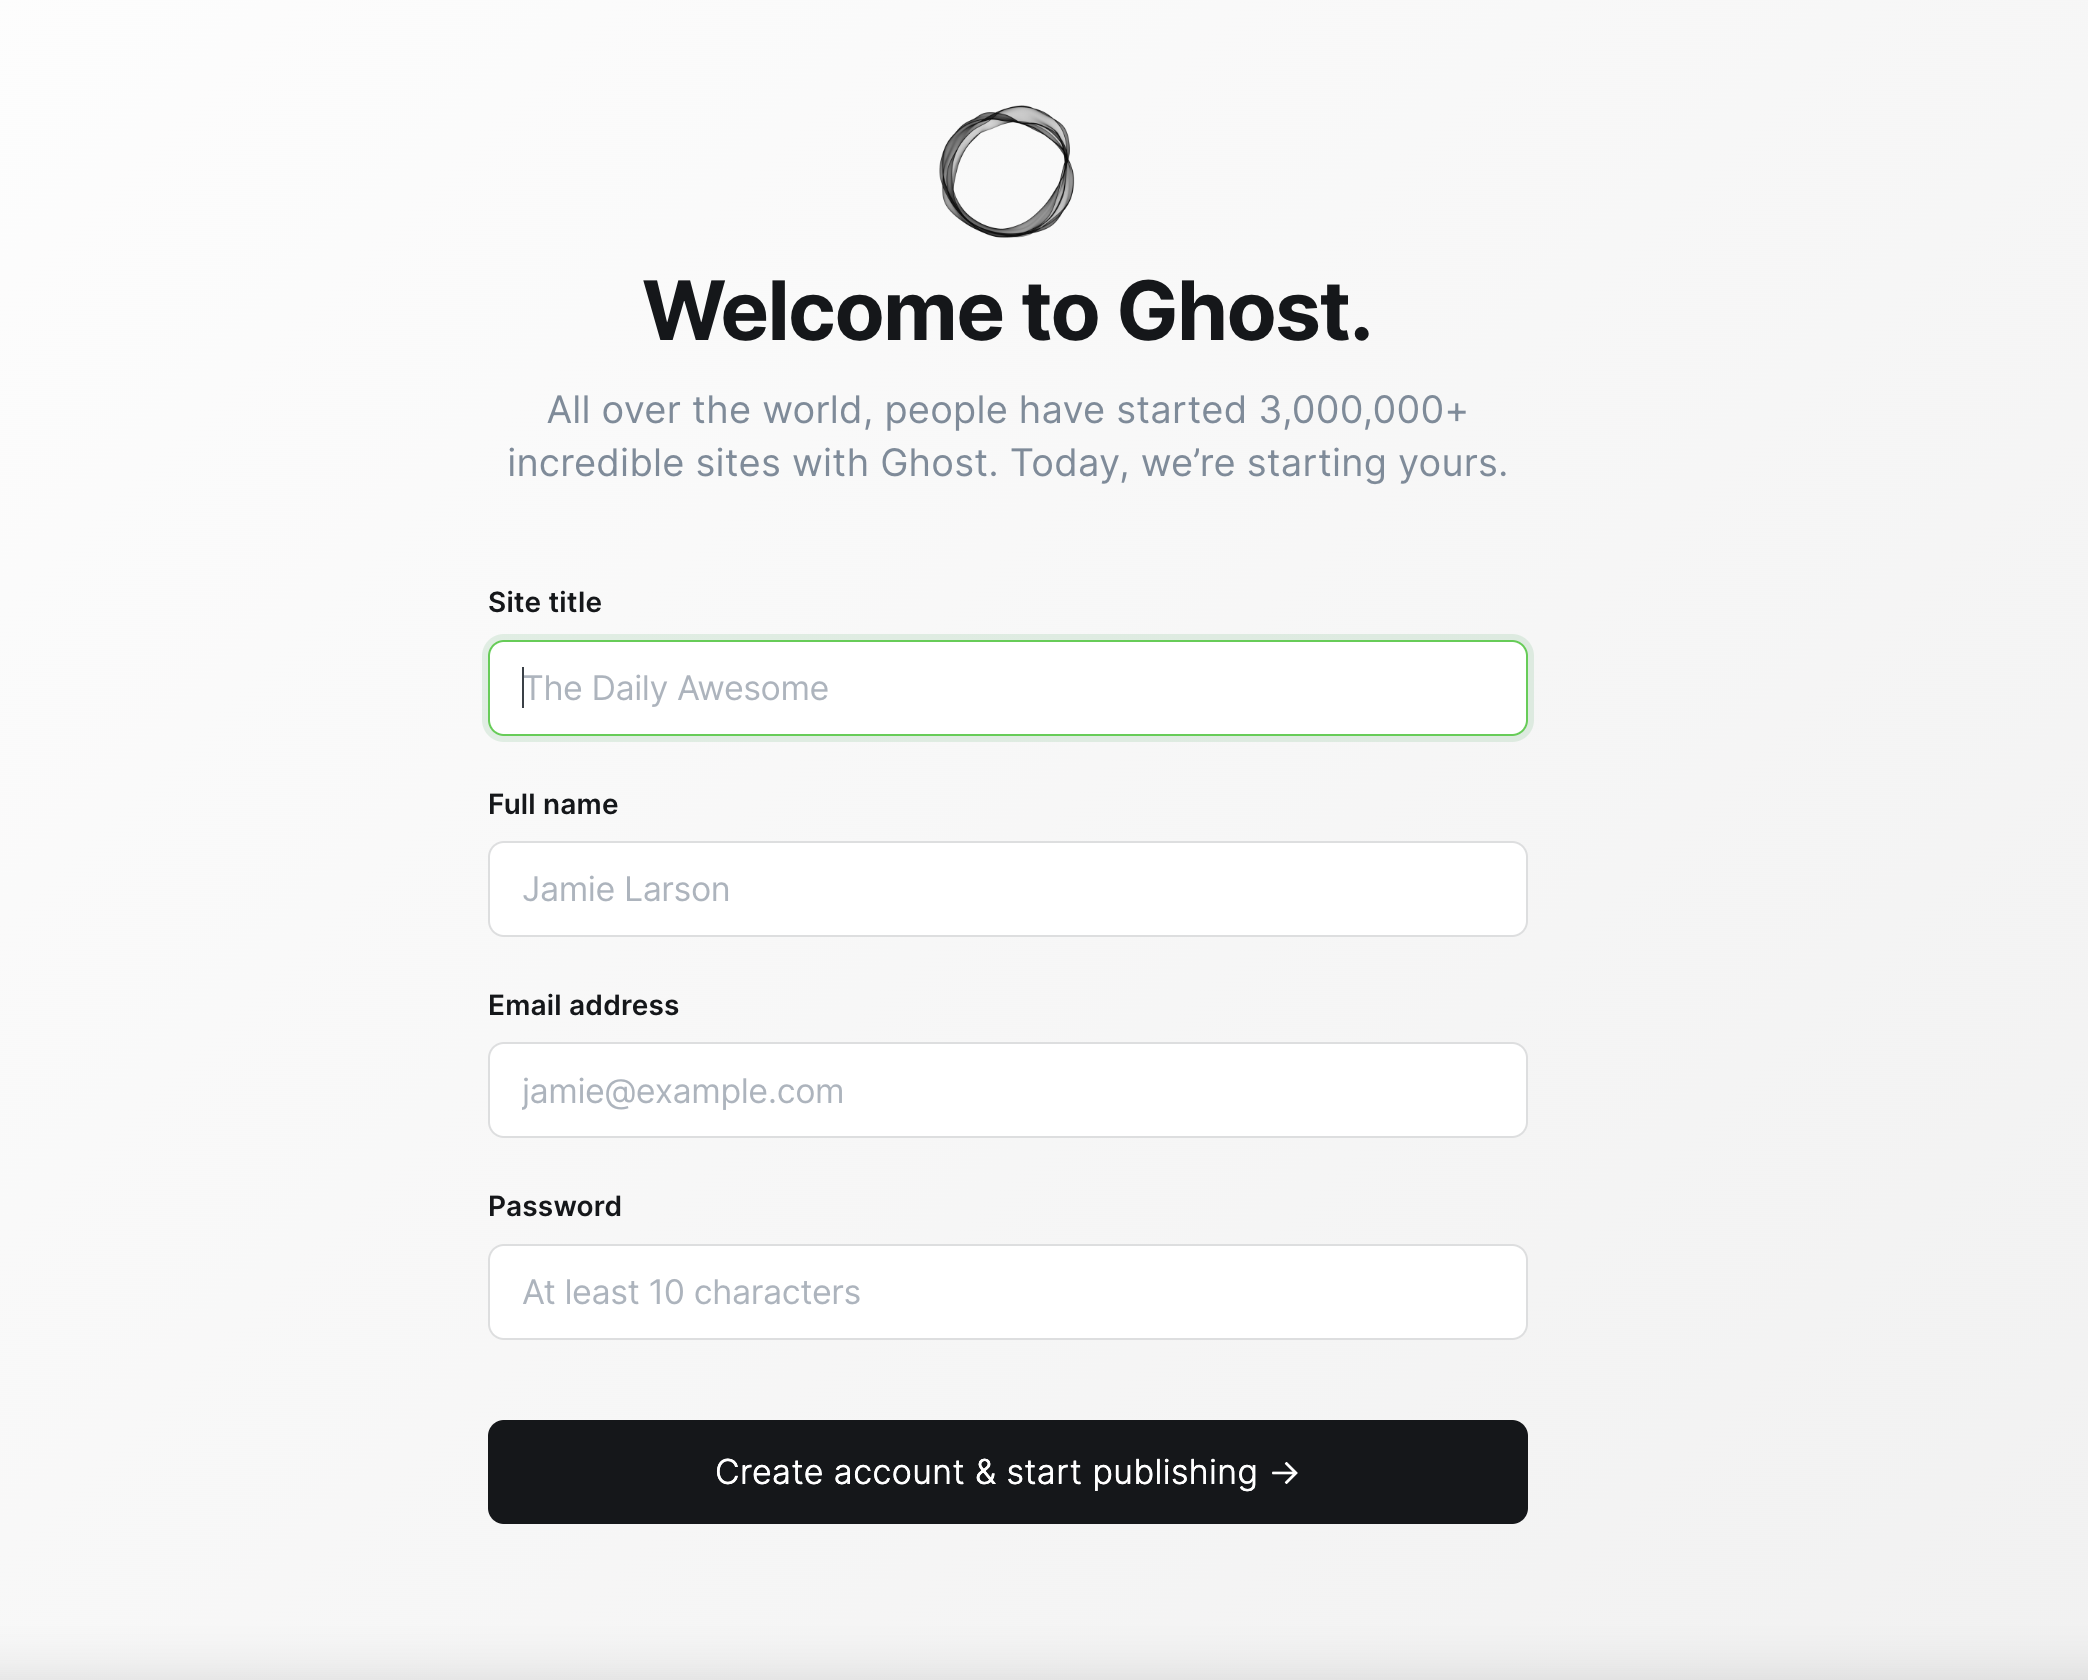 Blog development series - 
Setup MVP Blog with Ghost and Docker